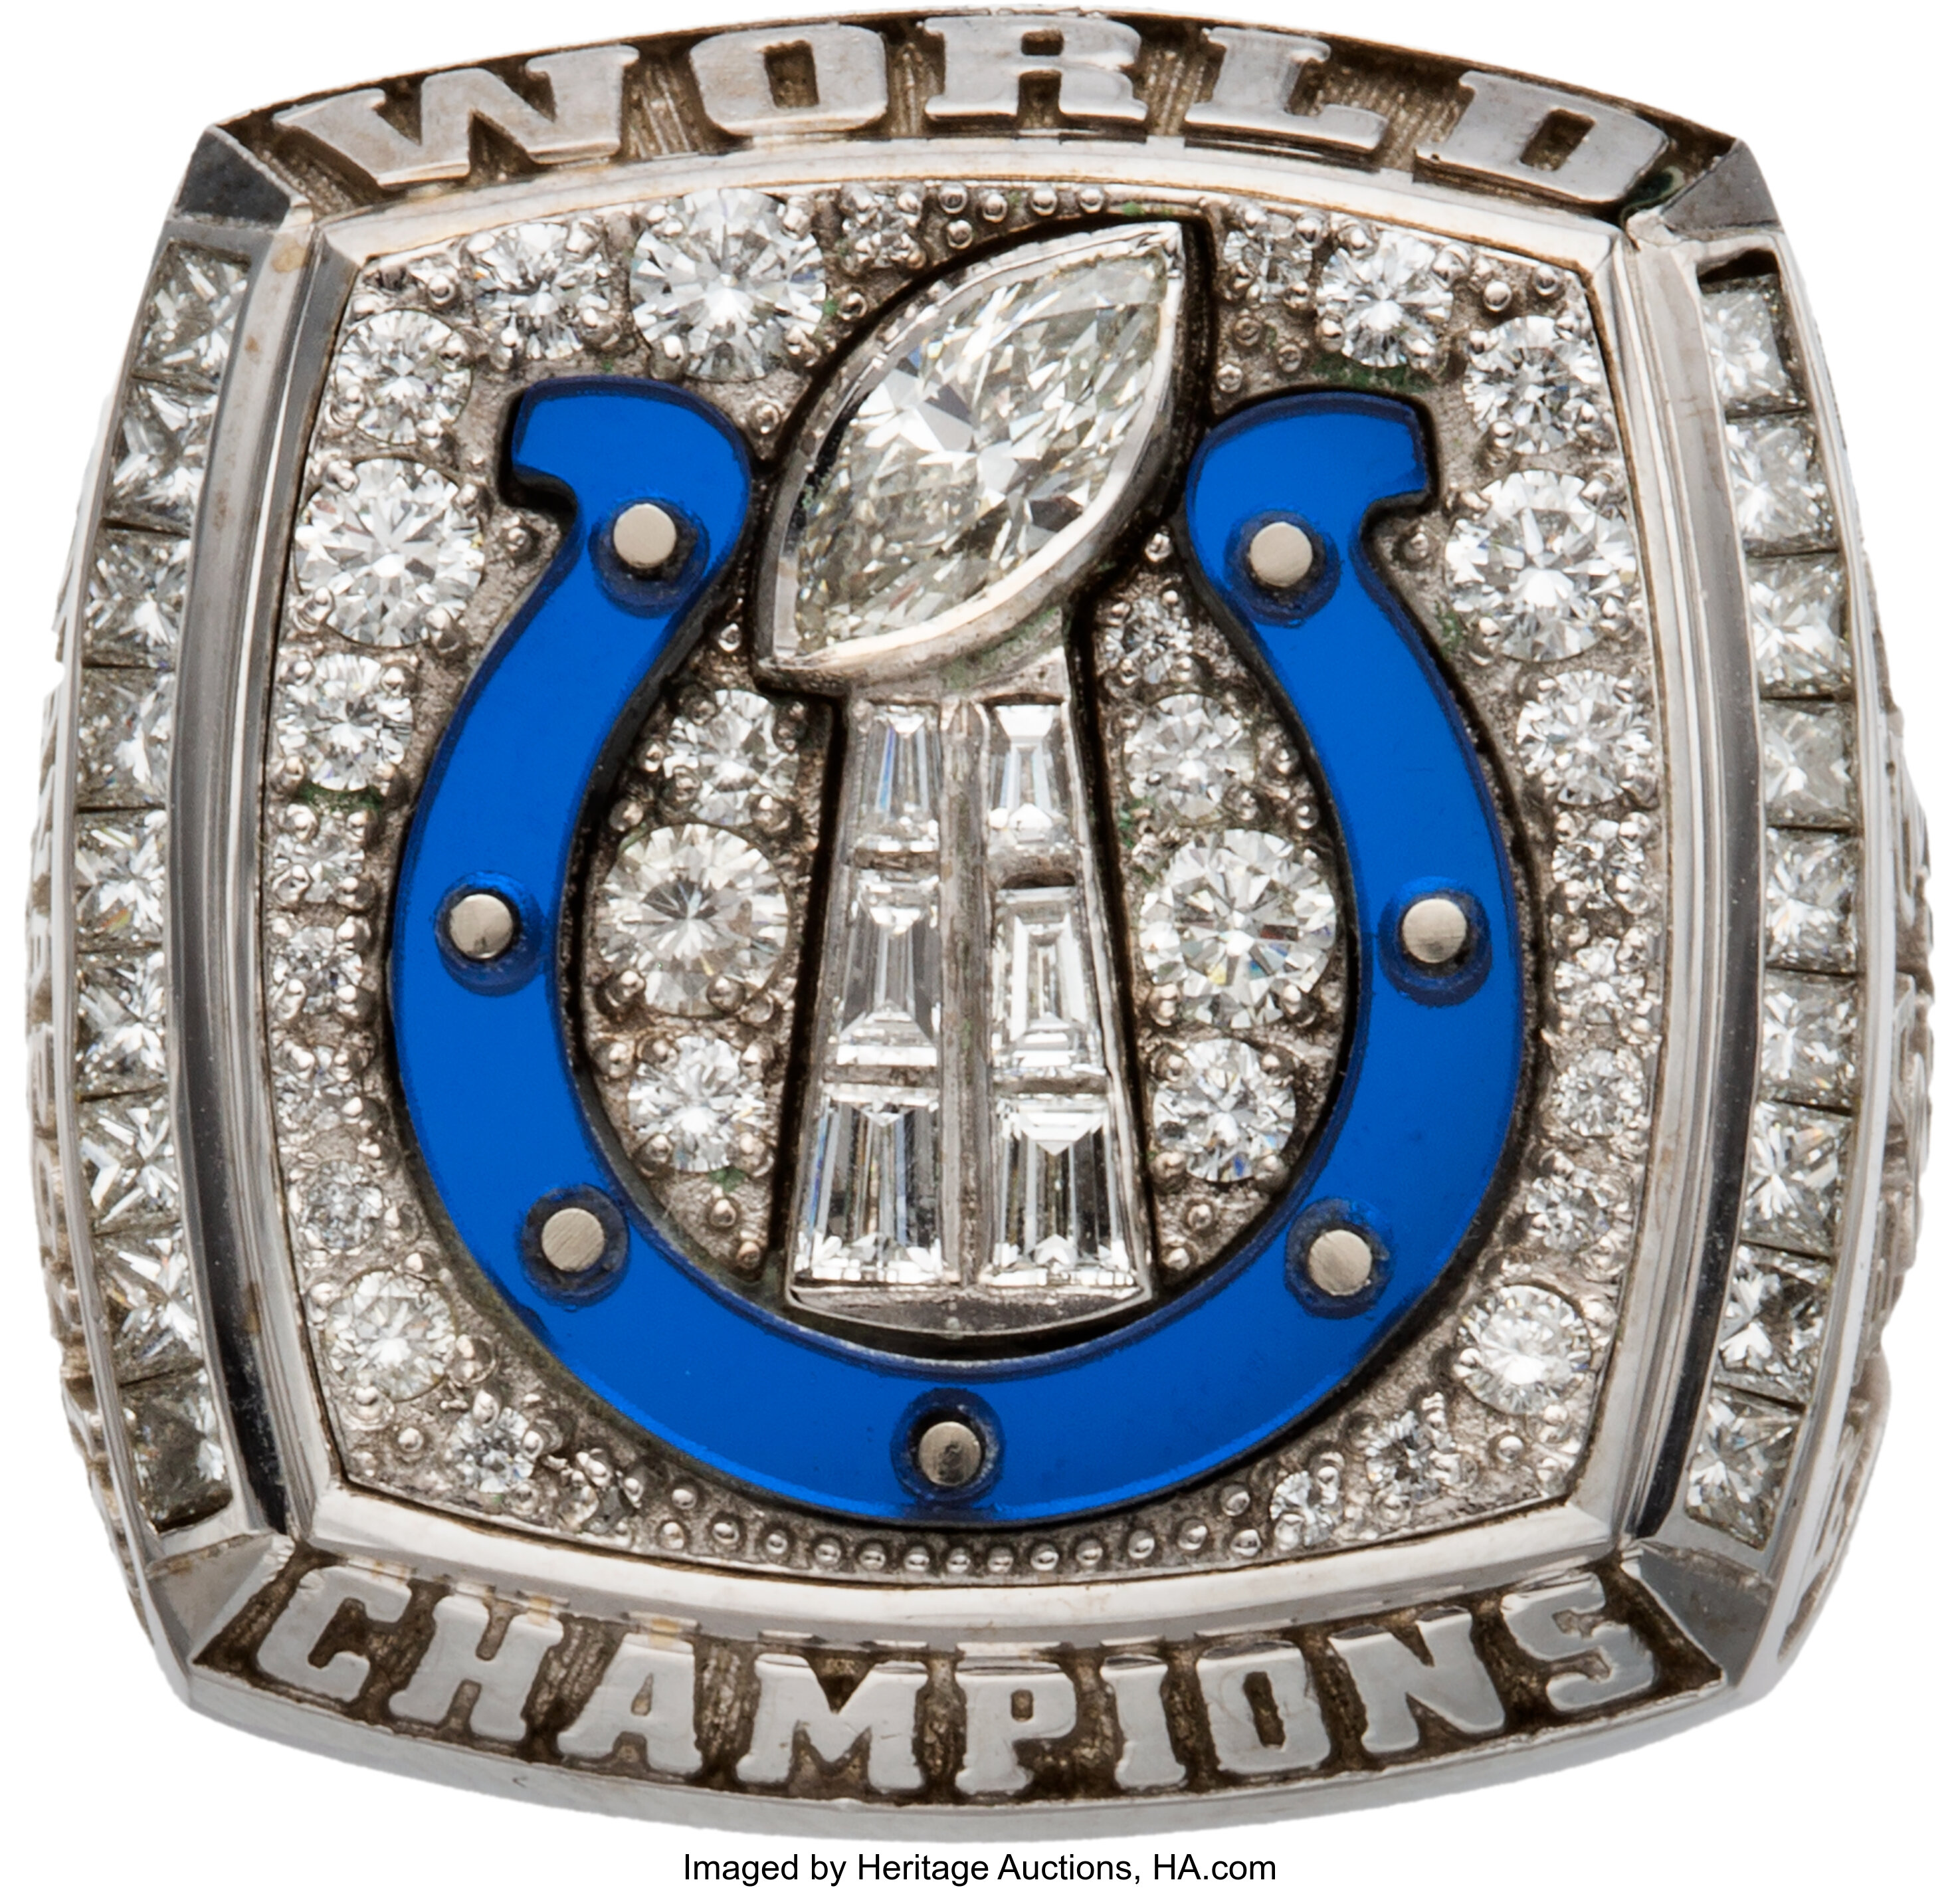 2006 Indianapolis Colts Super Bowl XLI Championship Ring Presented